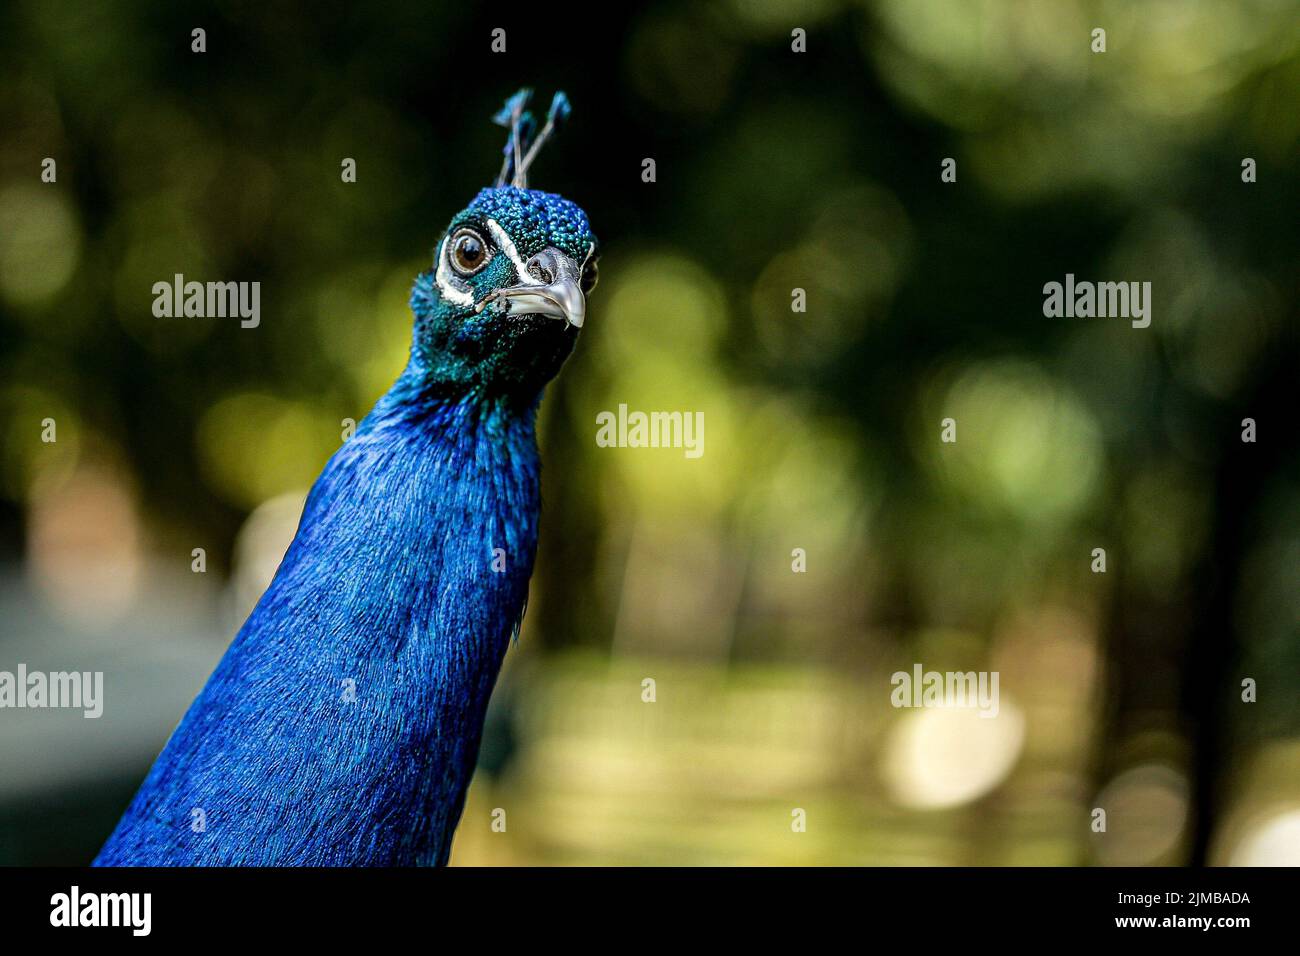 A portrait of an Indian peafowl (Pavo cristatus) Stock Photo